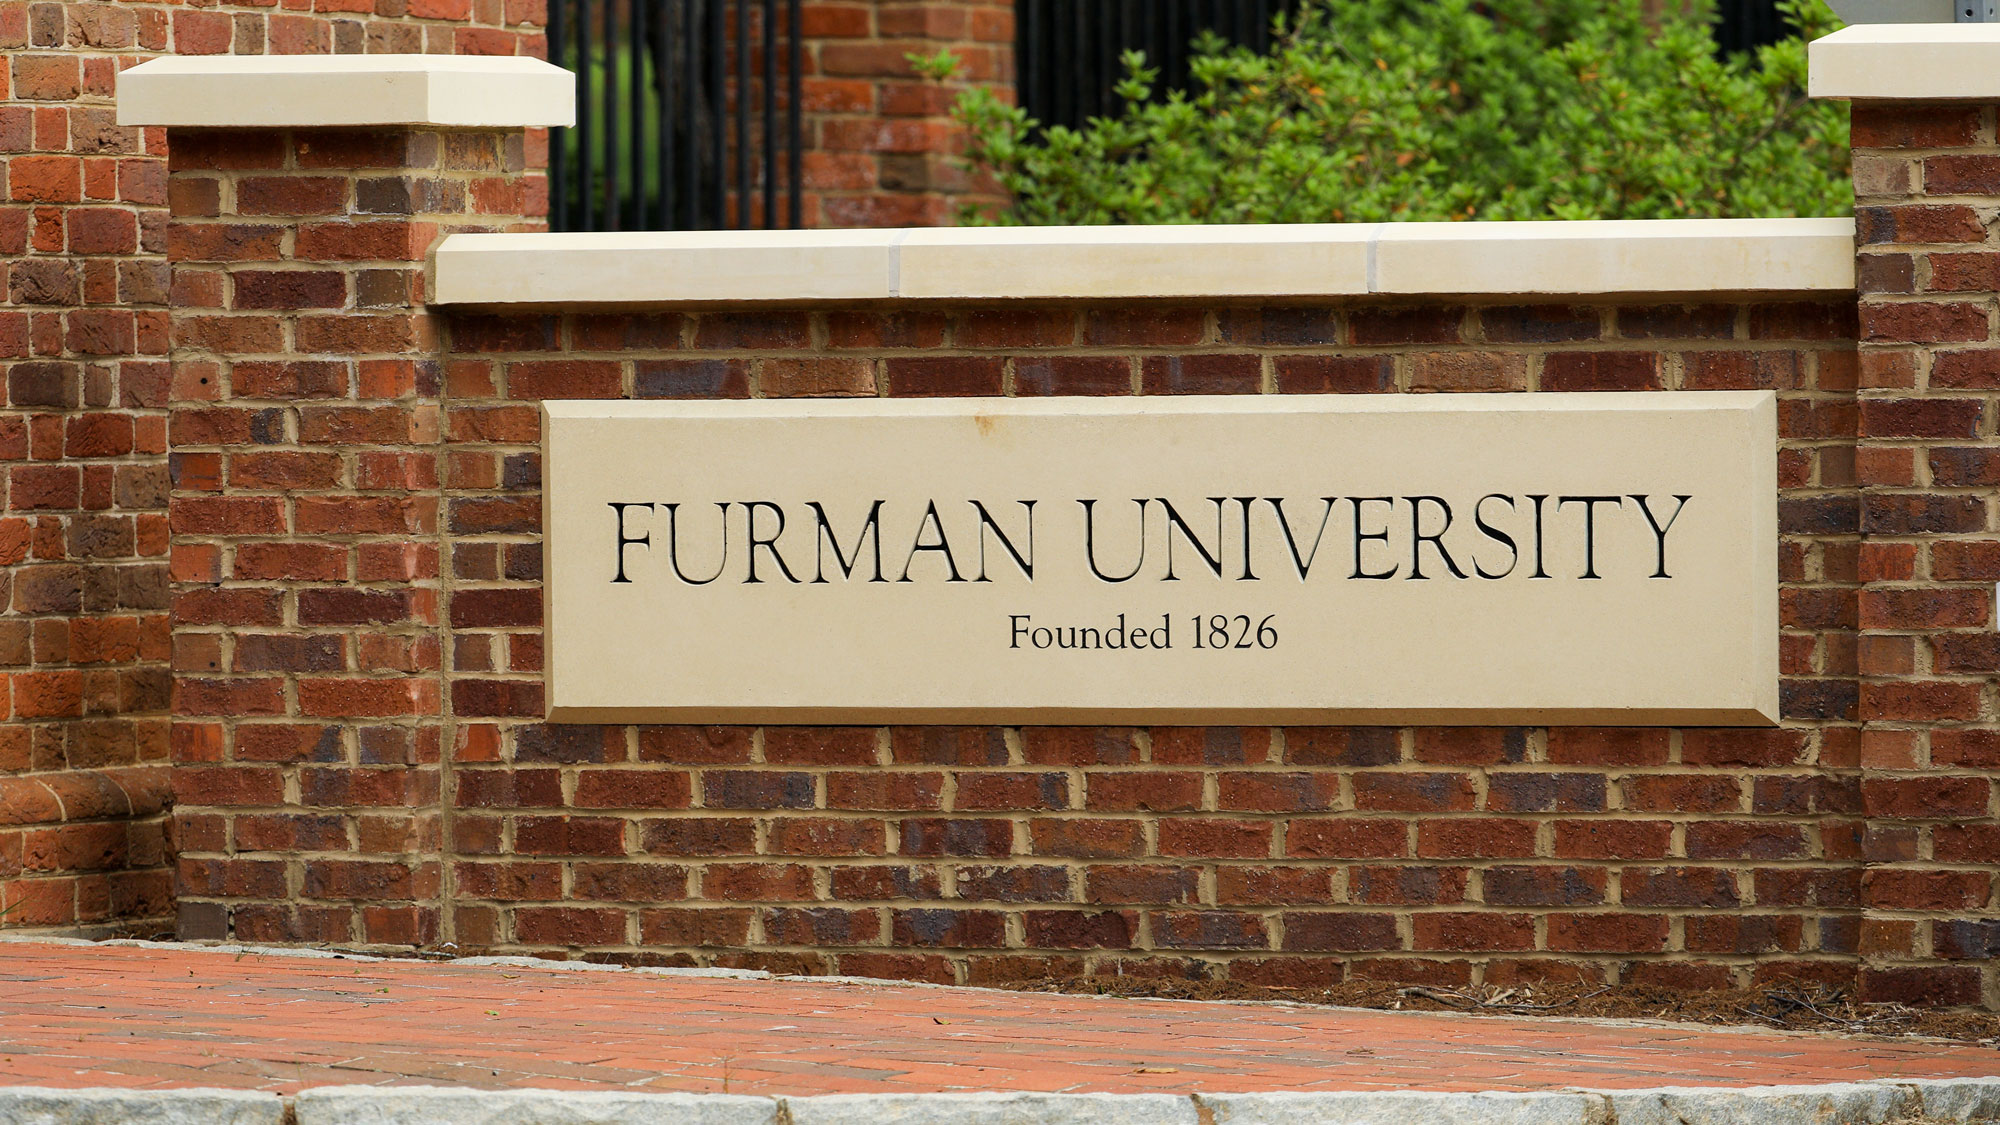 Furman University front gate on brick